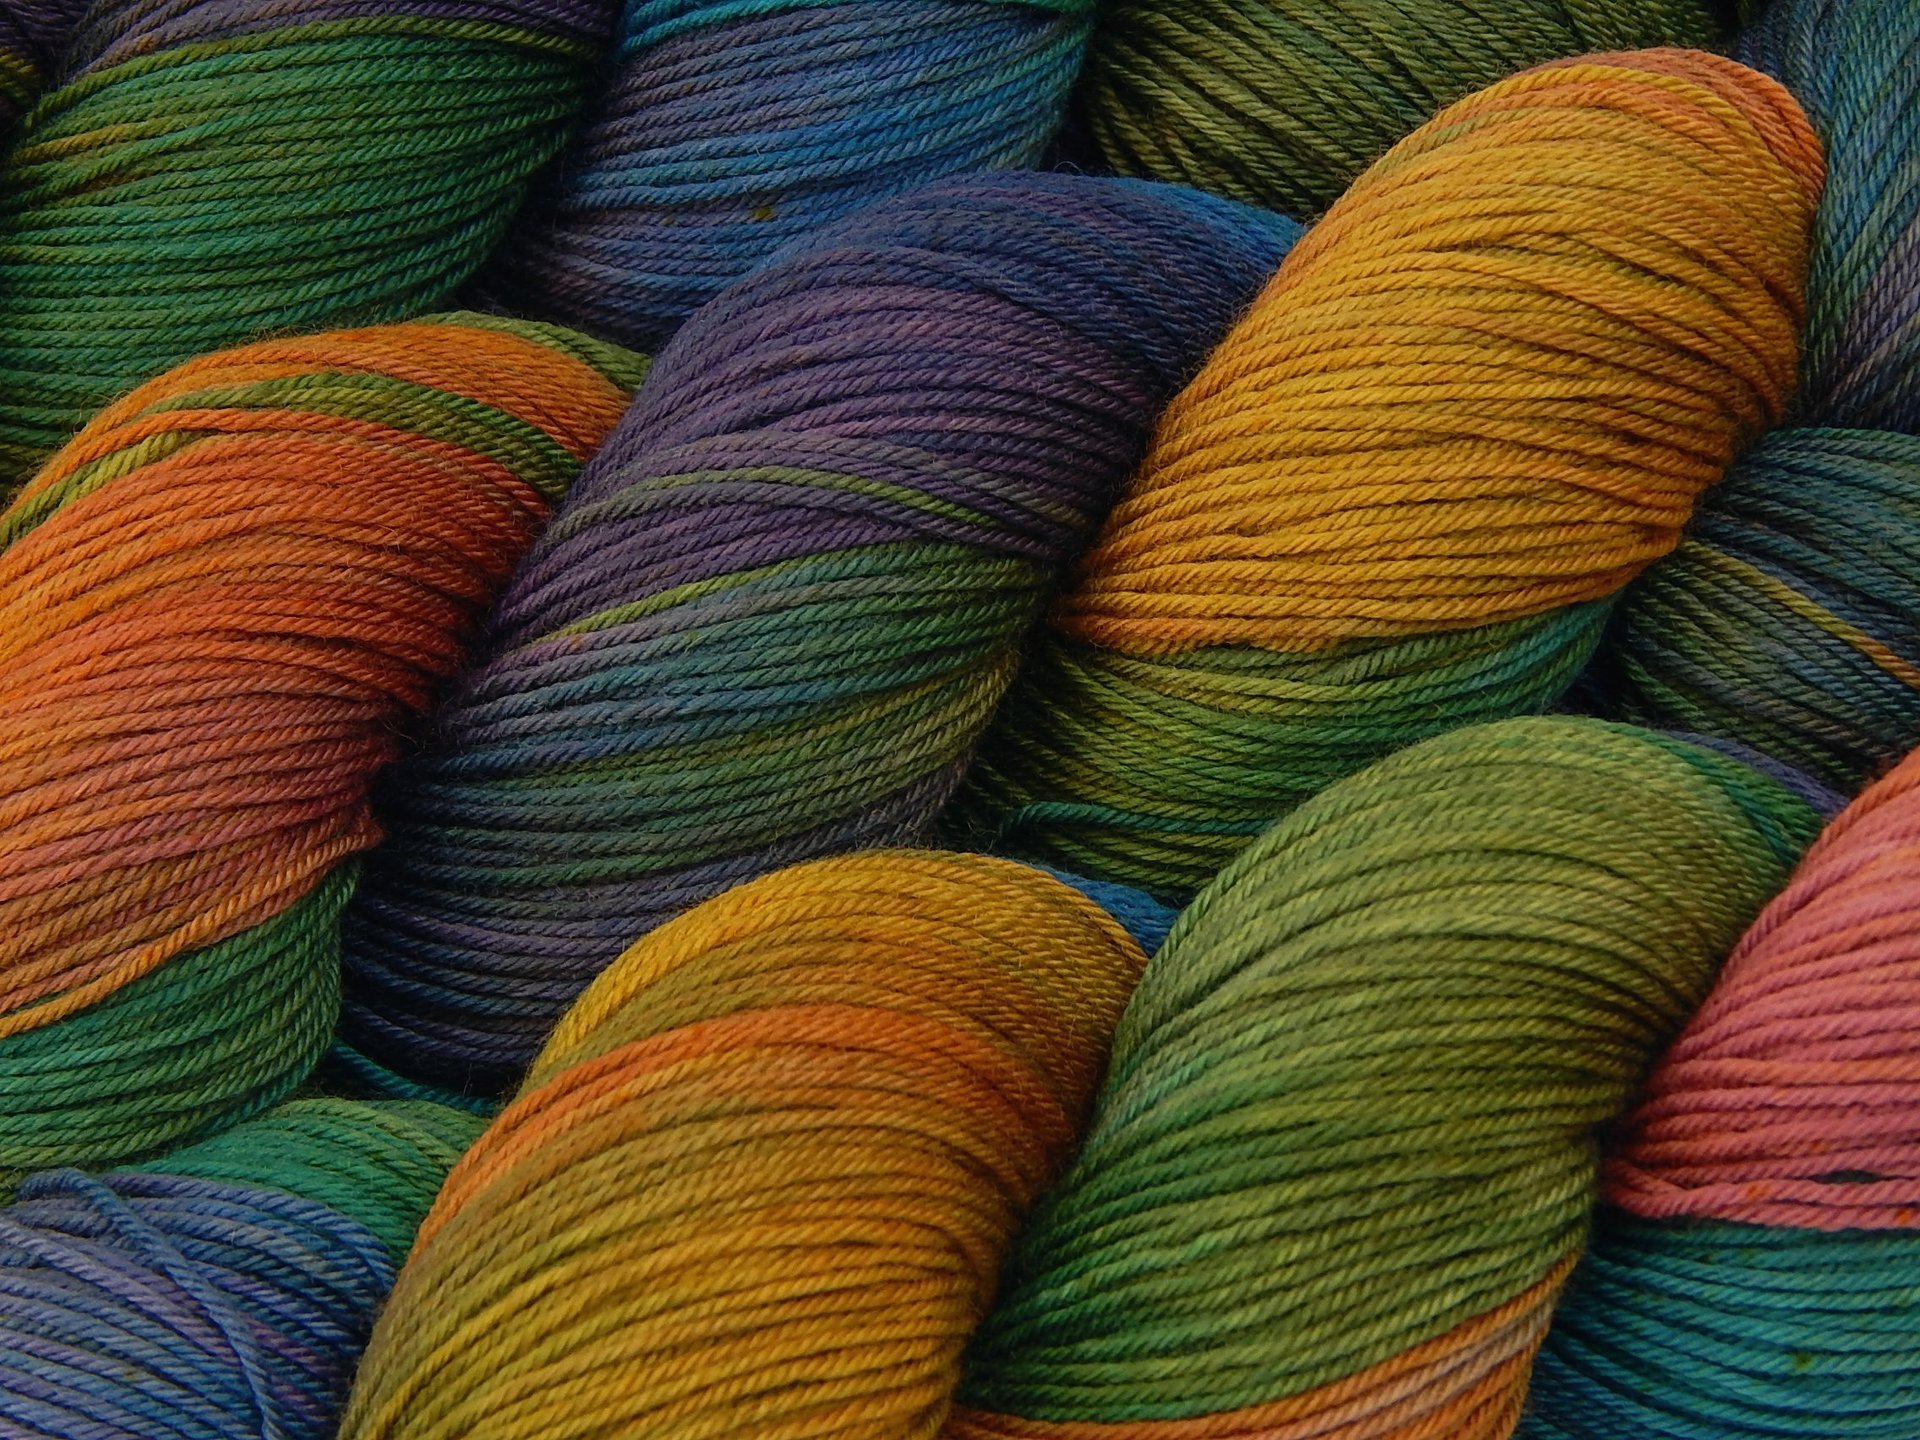 Hand Dyed Yarn, Fingering Sock Weight 4 Ply Superwash Merino Wool - Potluck Rainbow - Indie Dyer Colorful OOAK Knitting Yarn 